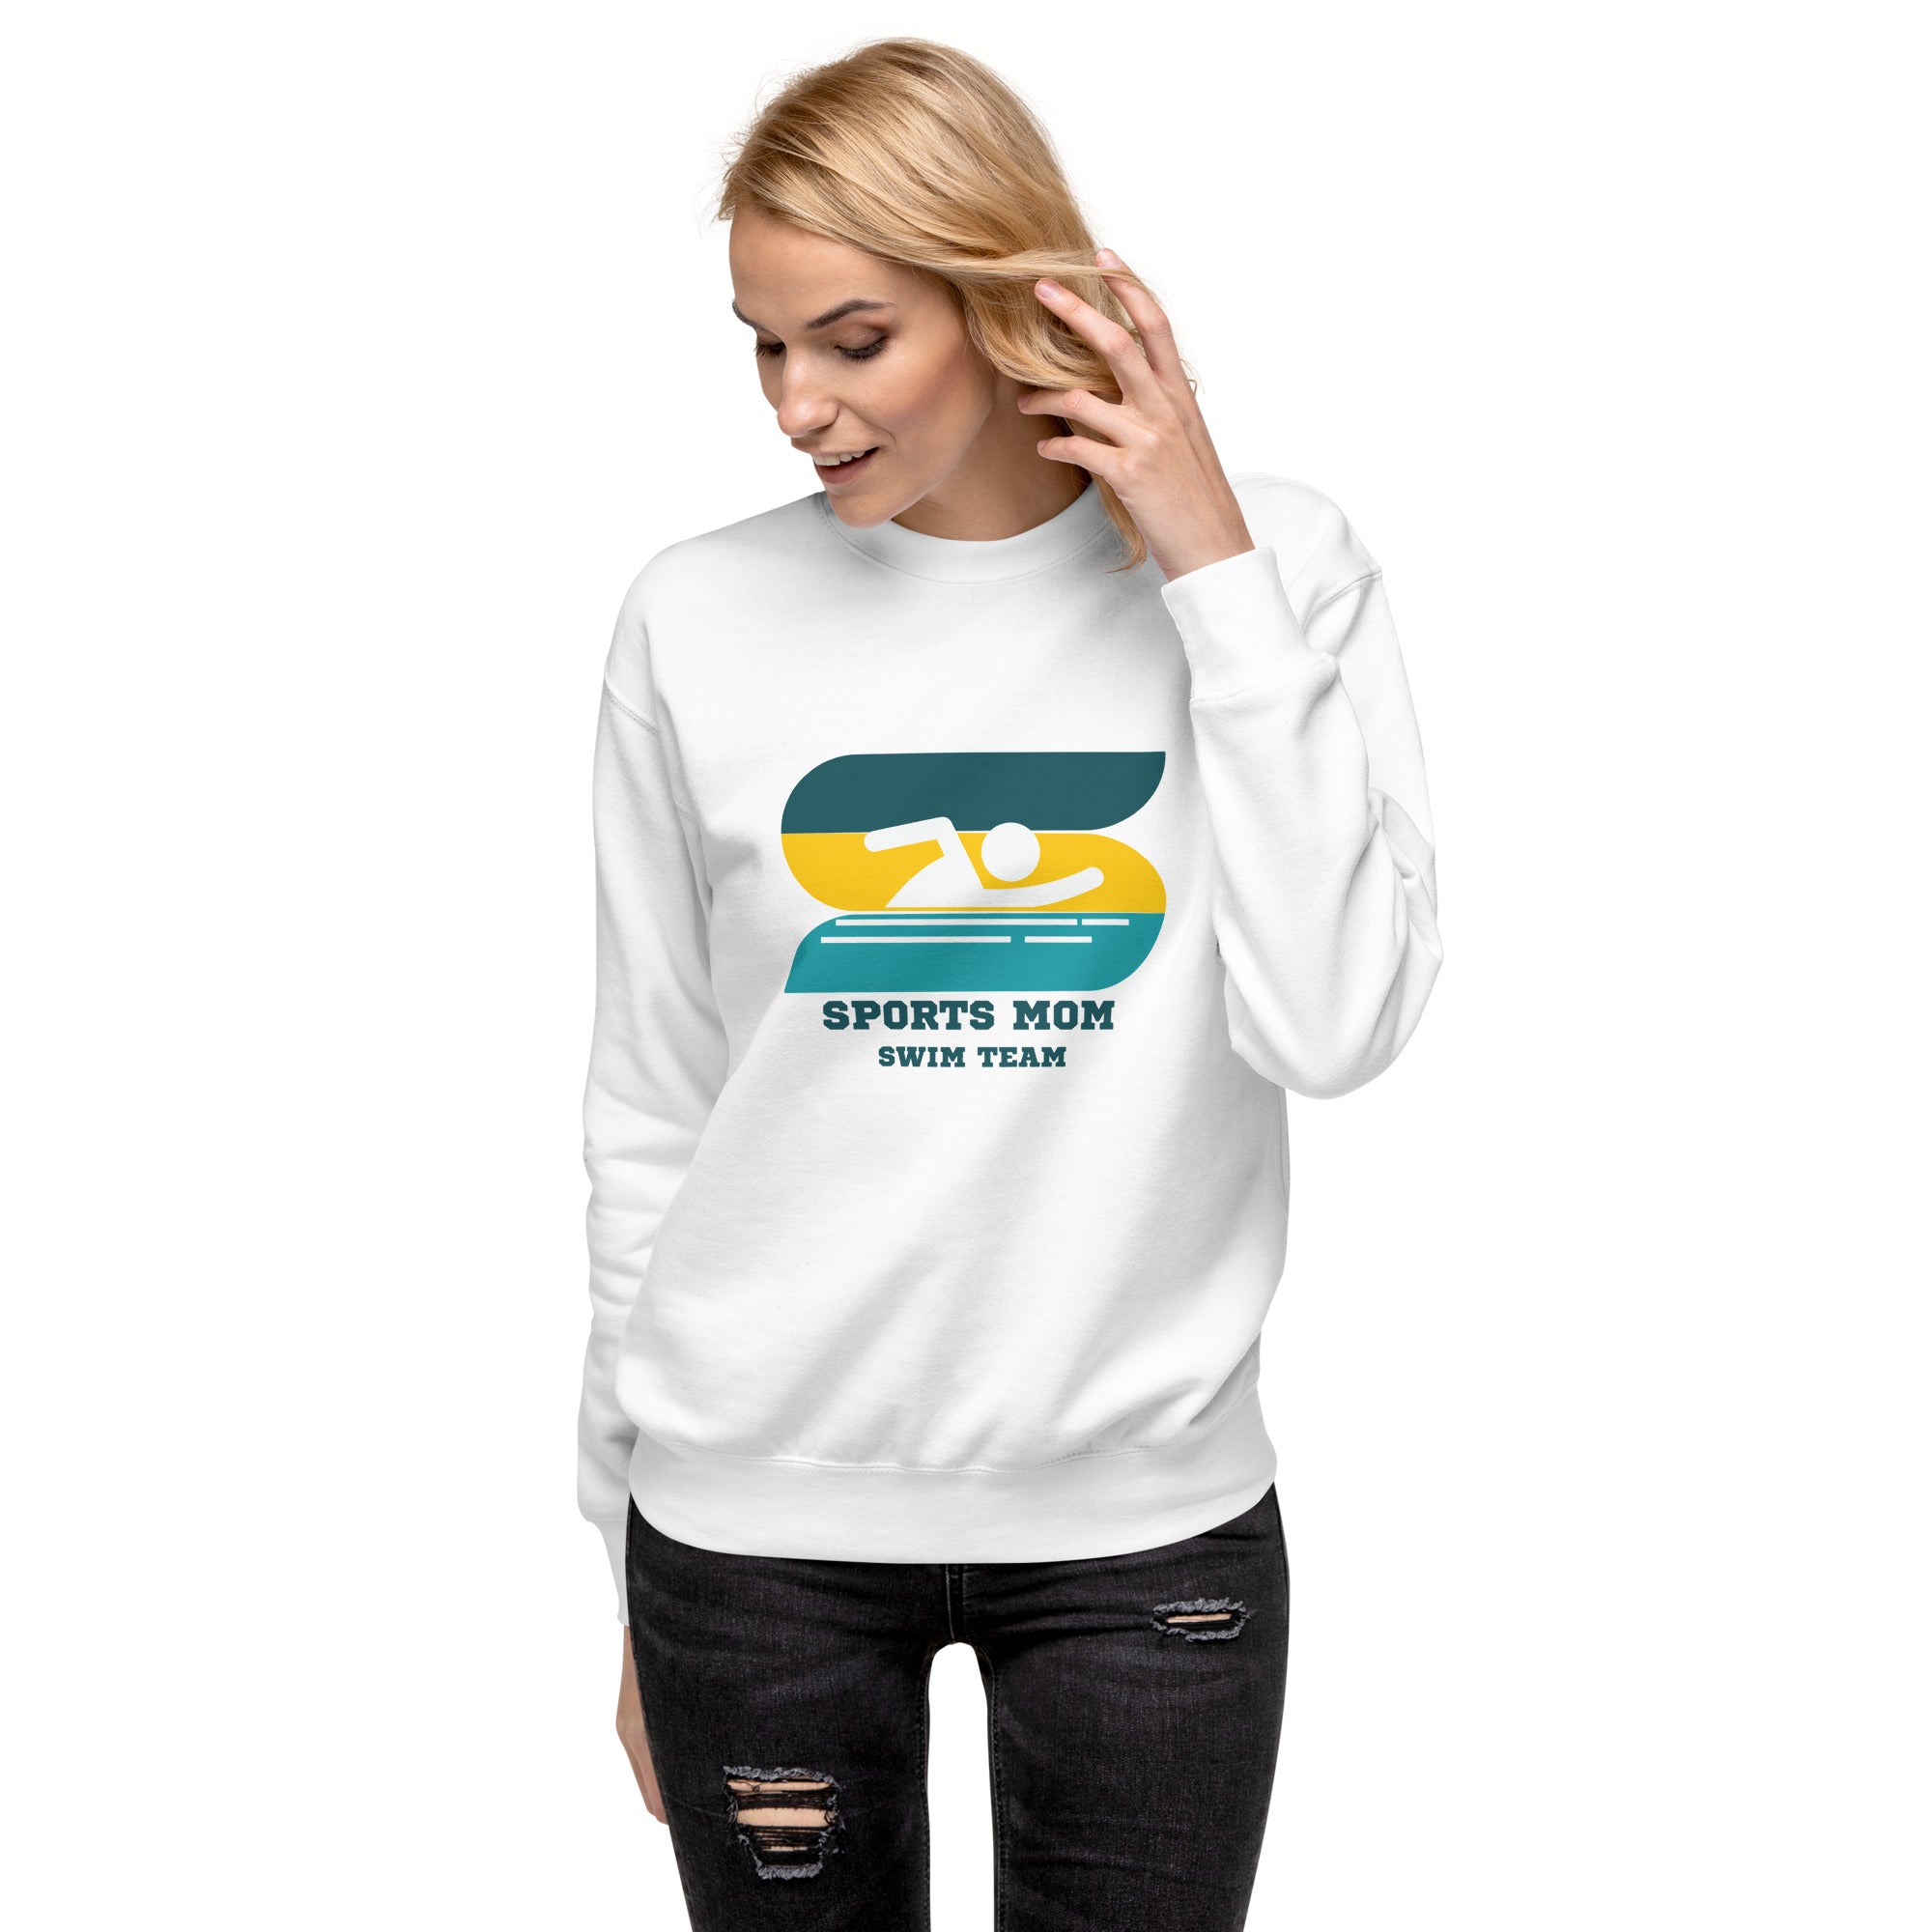 The Original Sports Mom Swim Team Women's Premium Sweatshirt